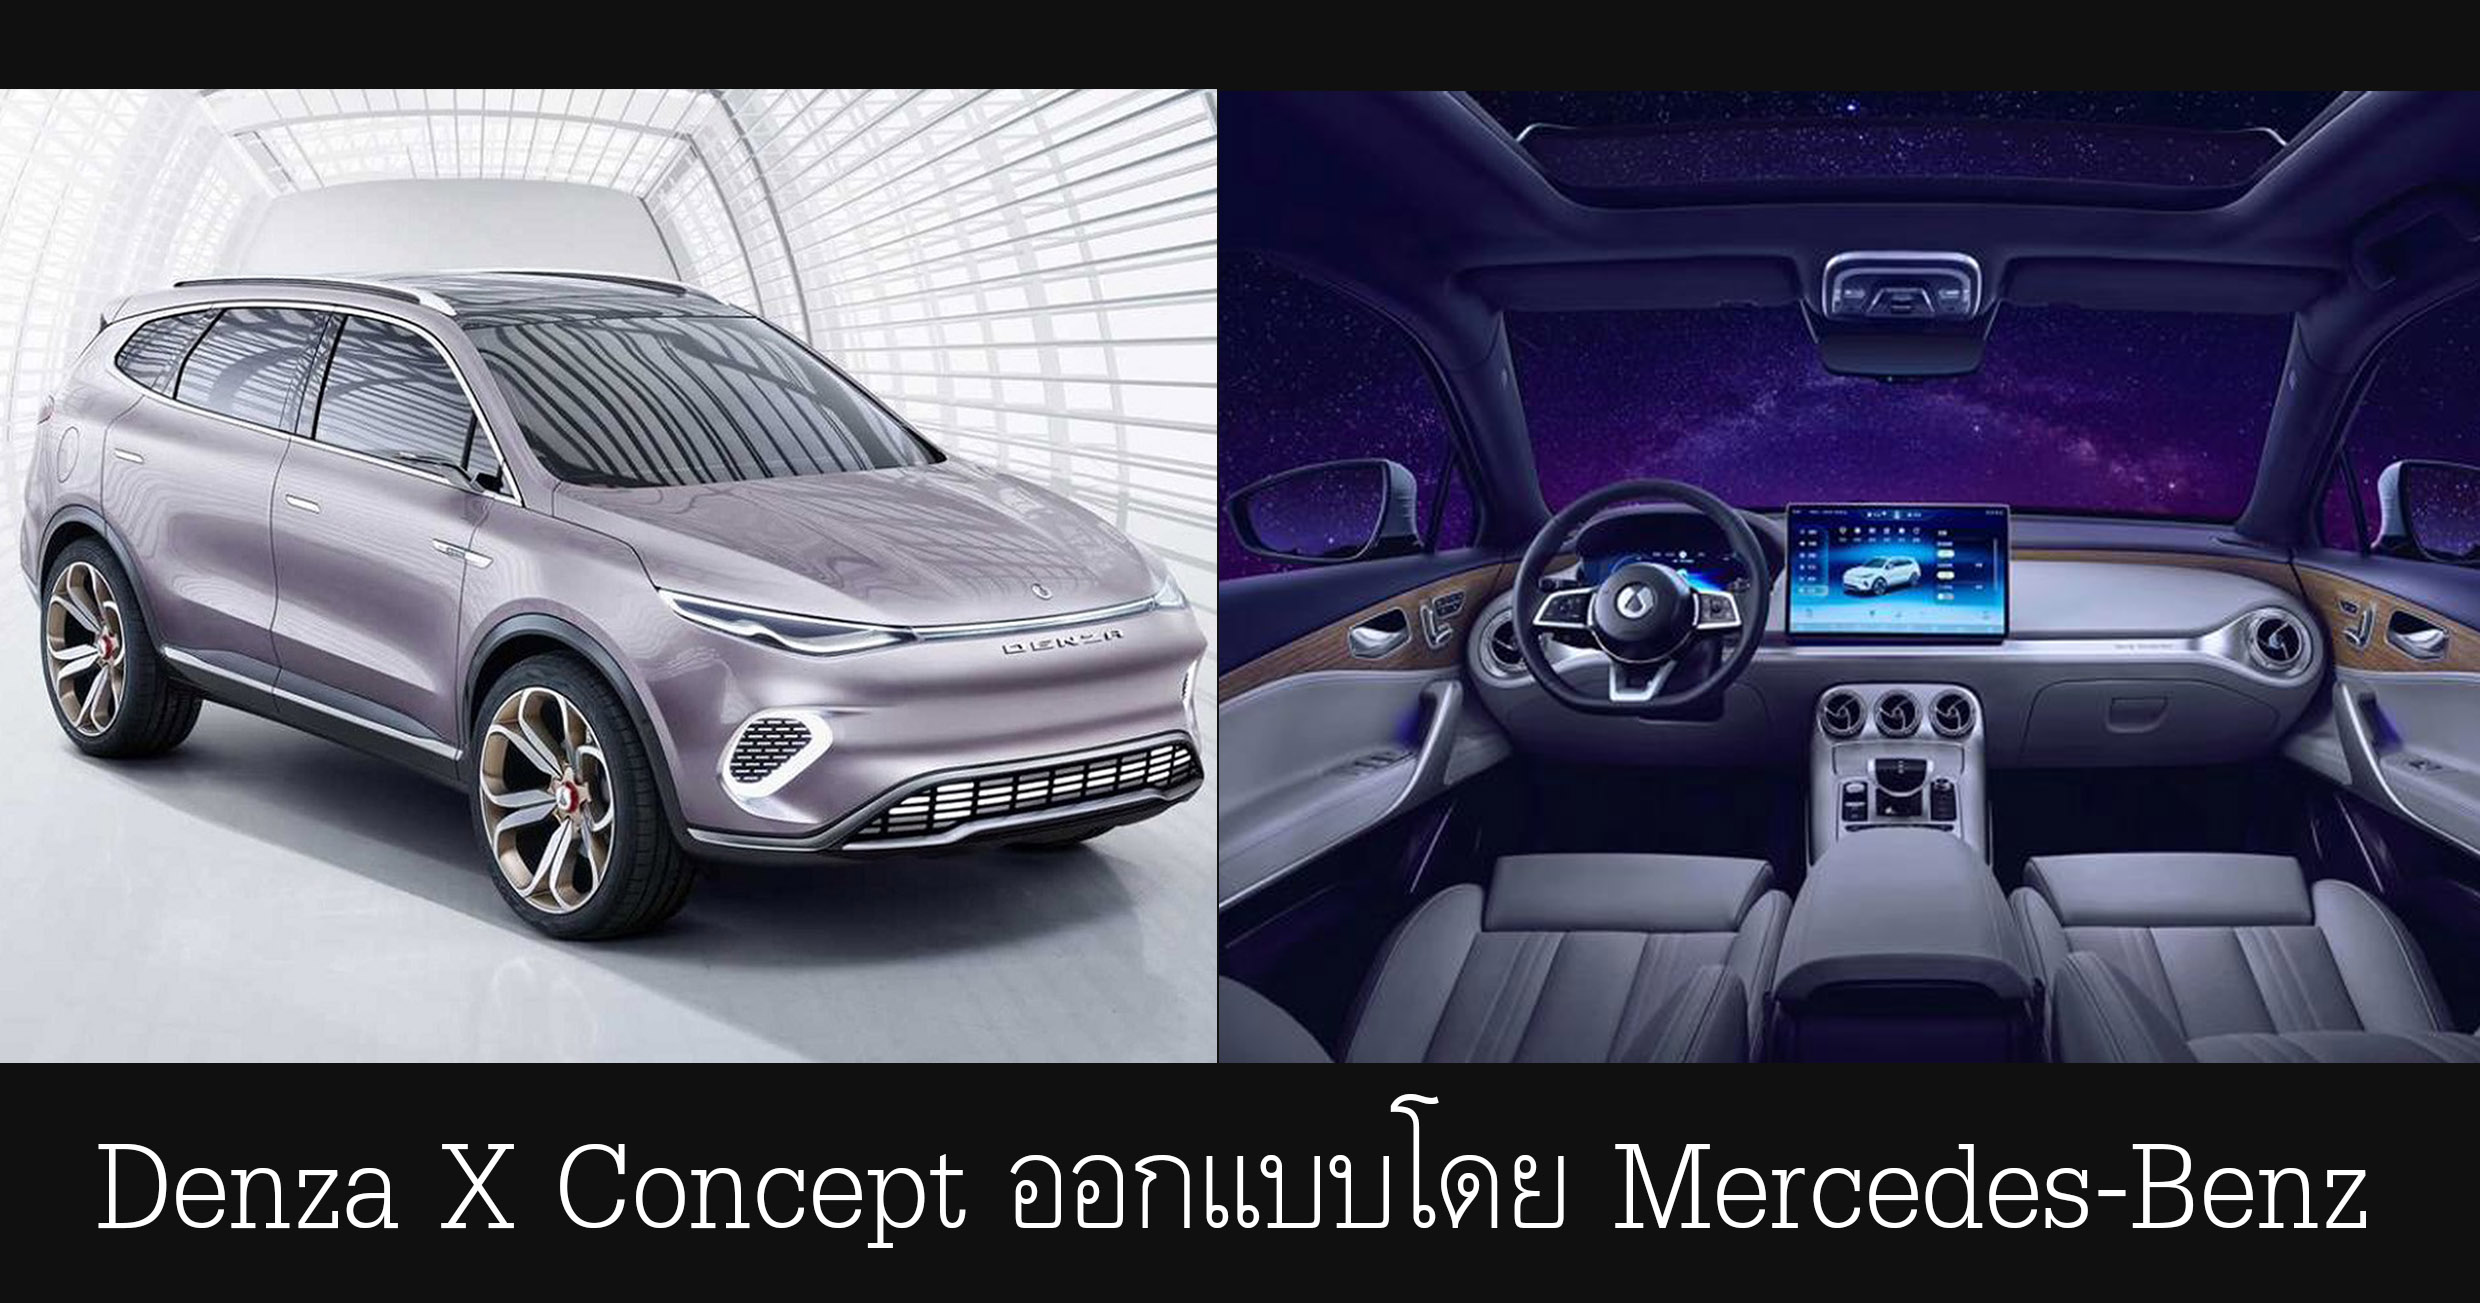 Denza X Concept ออกแบบโดย Mercedes-Benz ในเมืองจีน